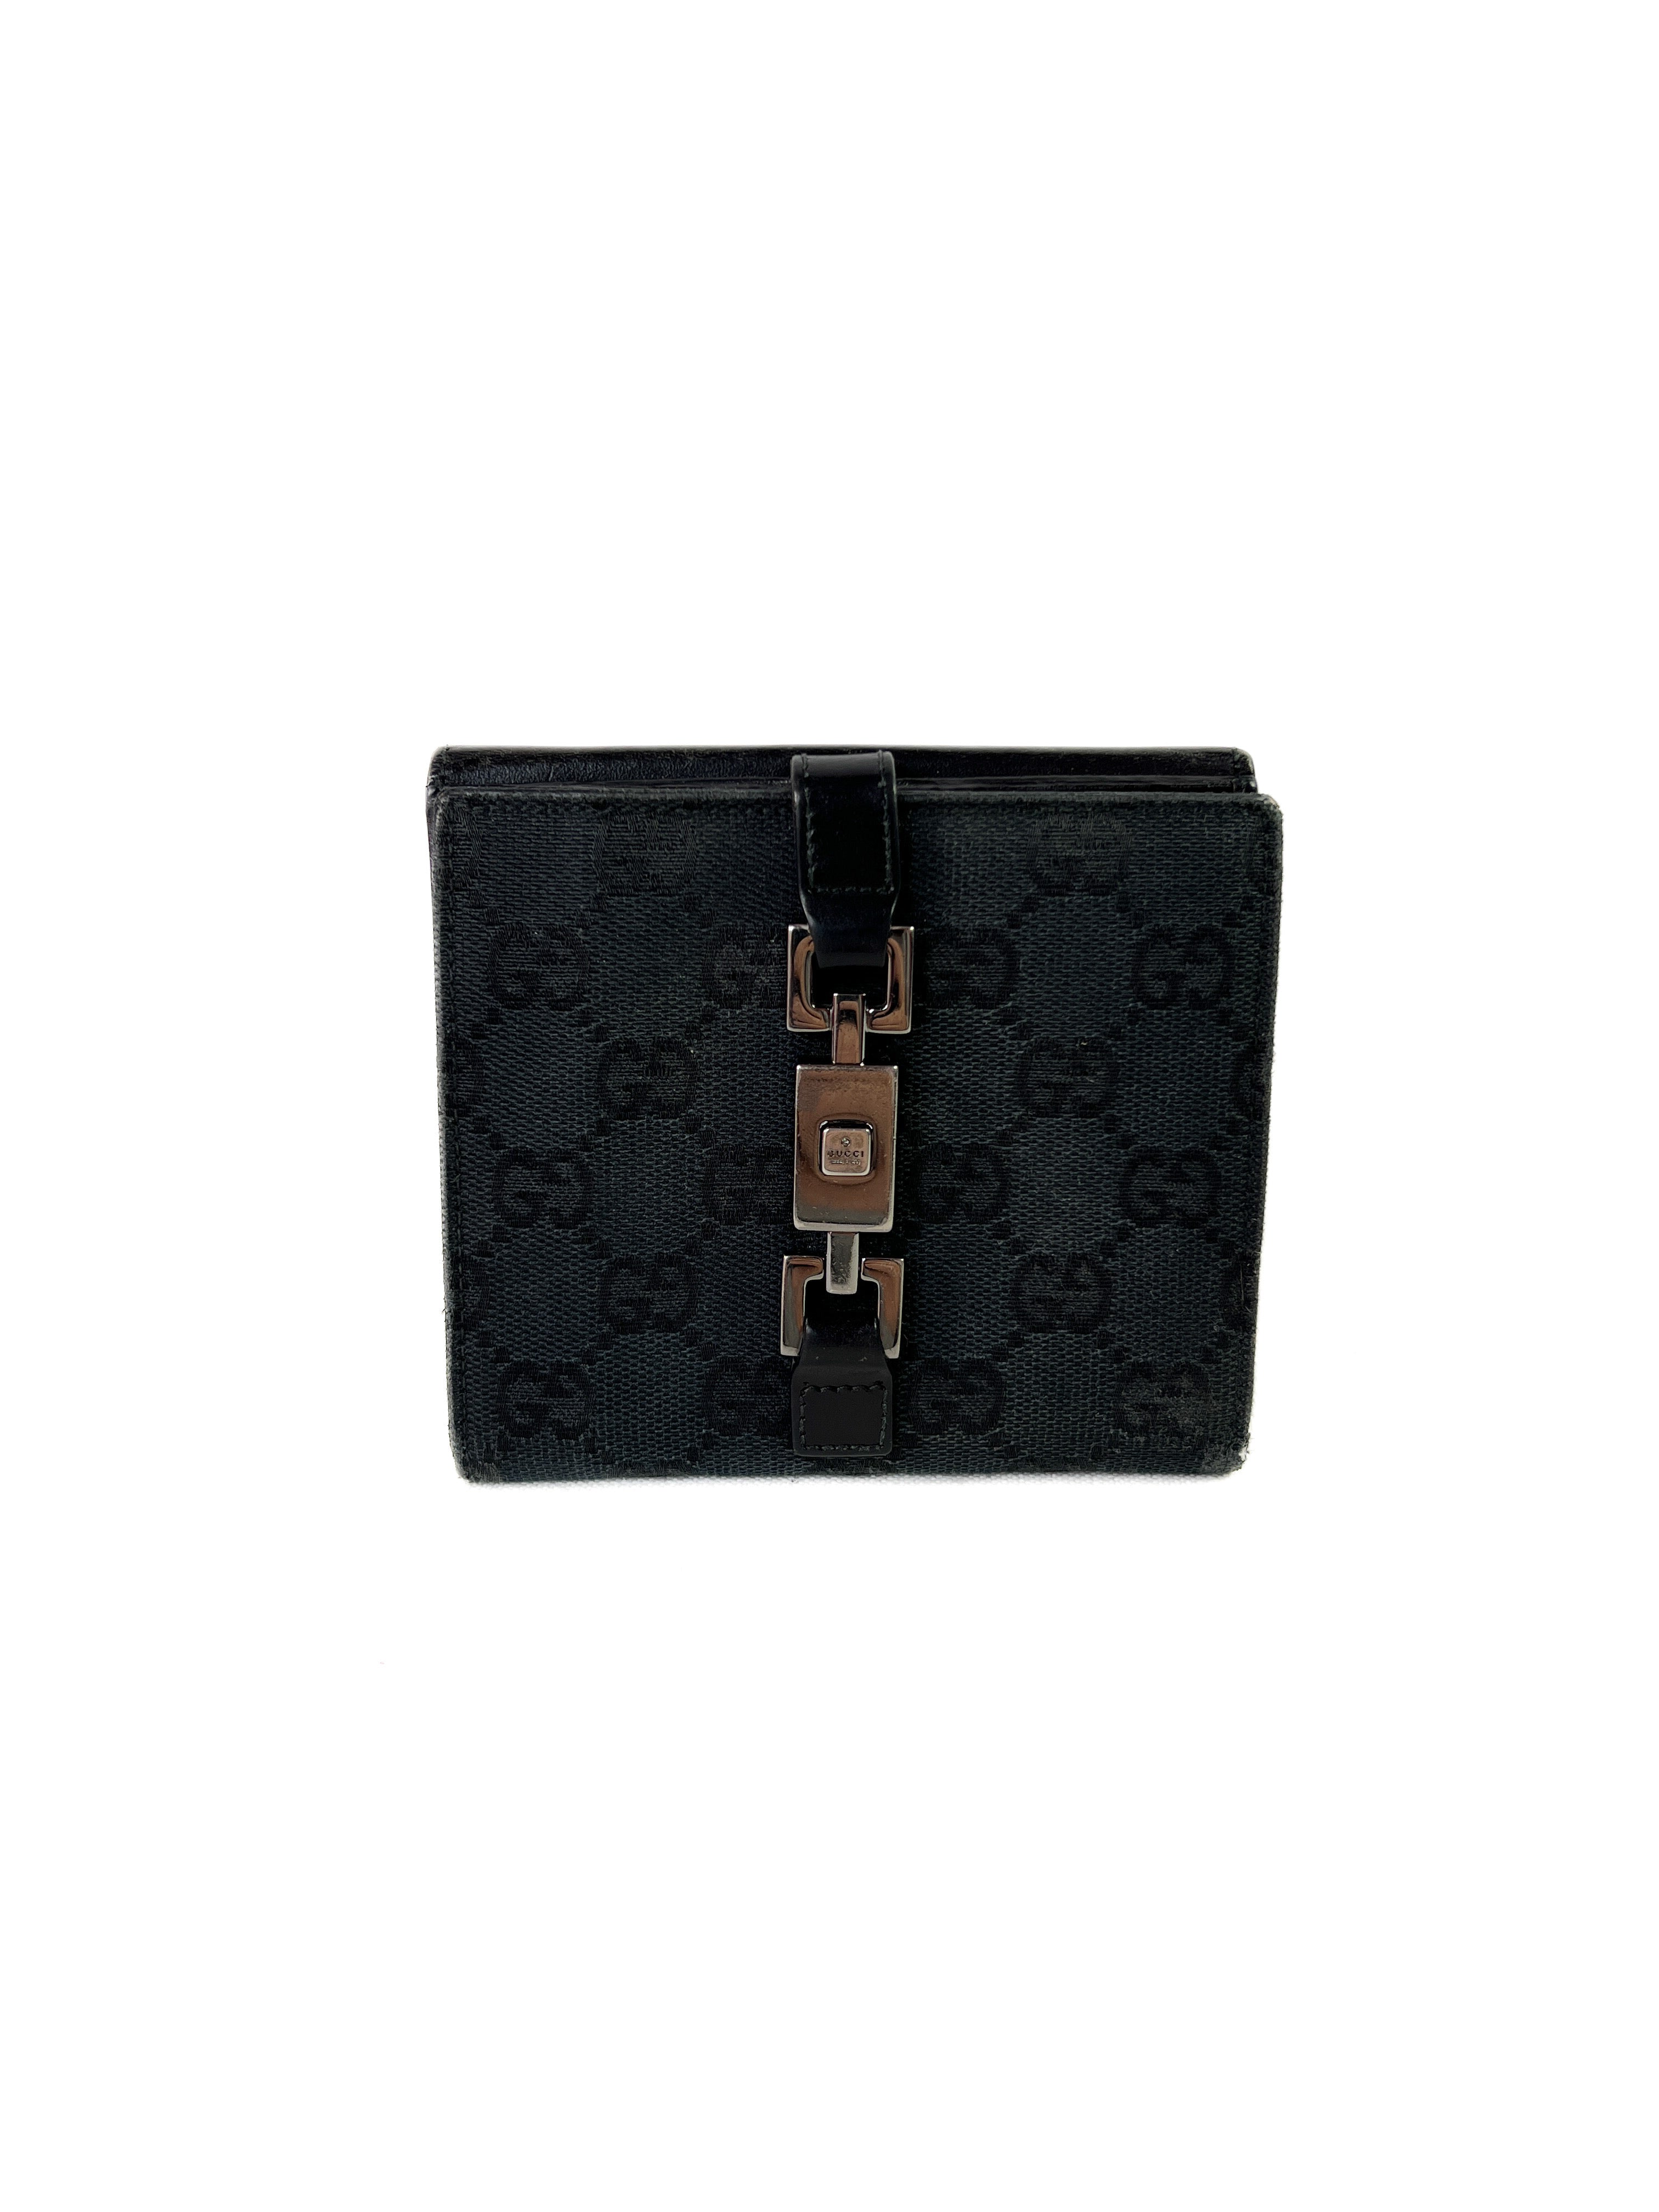 Gucci Monogram GG Piston Lock Compact Wallet